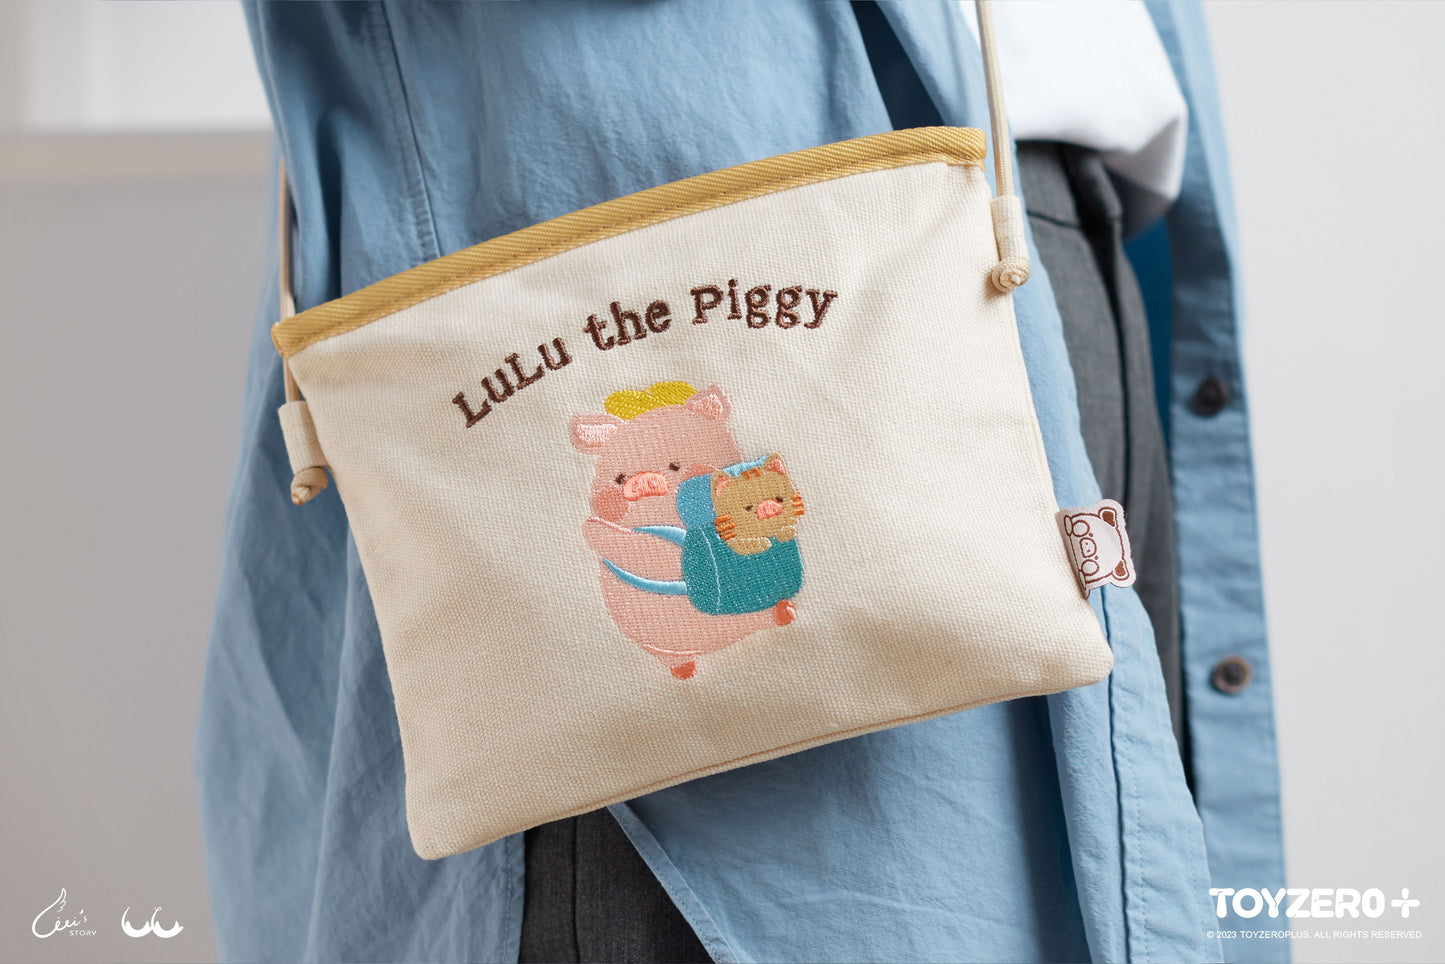 LuLu the Piggy Find Your Way - Travel Sacoche Bag 罐頭豬LuLu 旅行系列 - 隨身小包